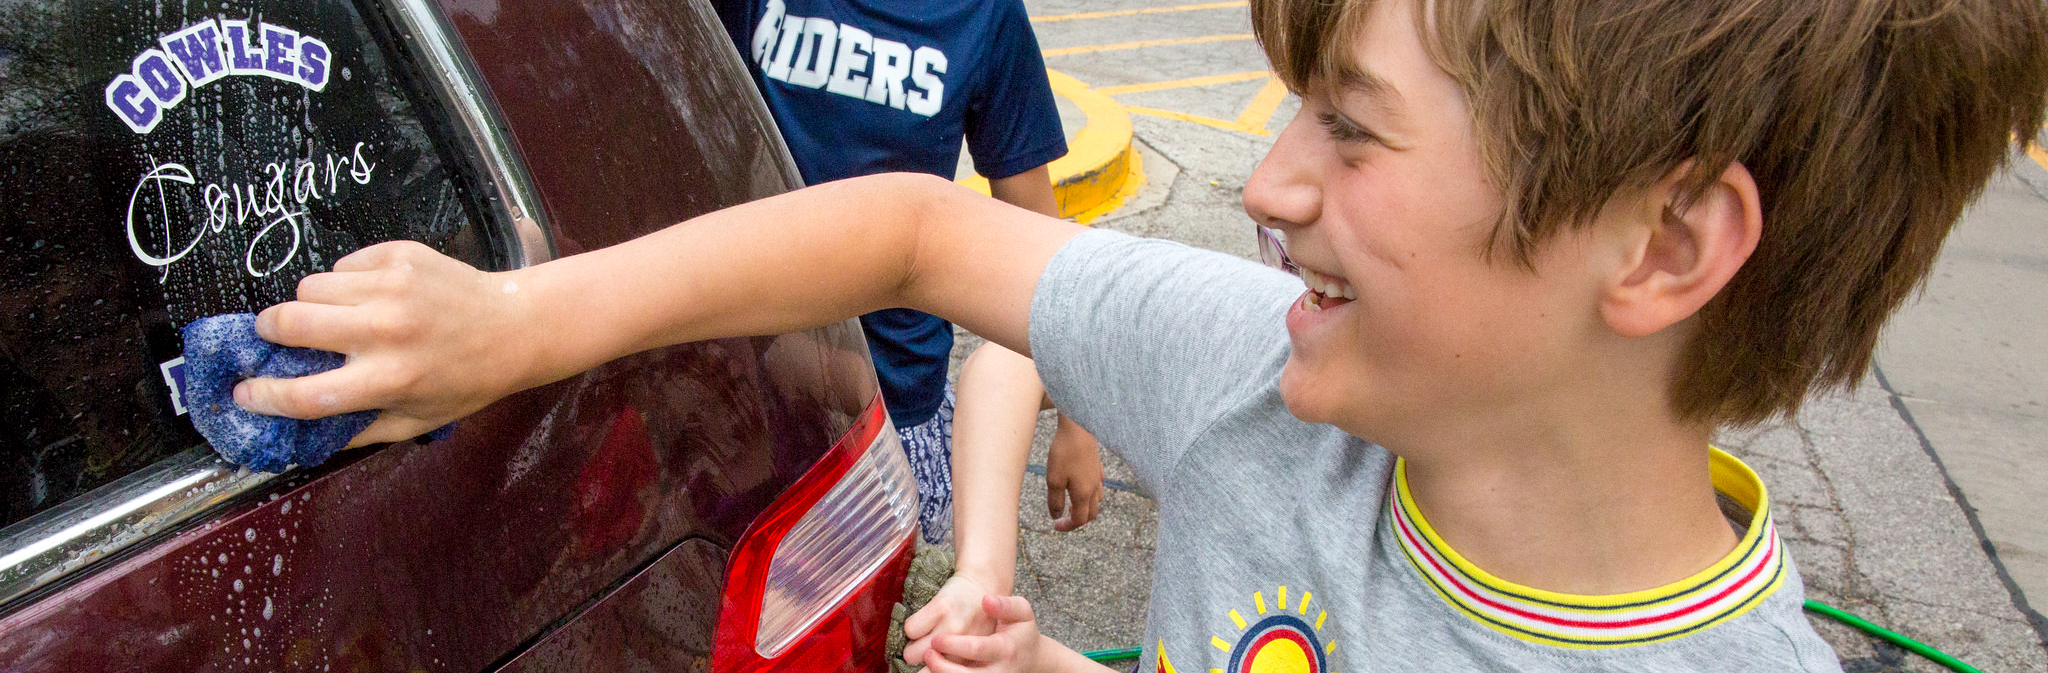 Cowles Families Show Teacher Appreciation With a Car Wash